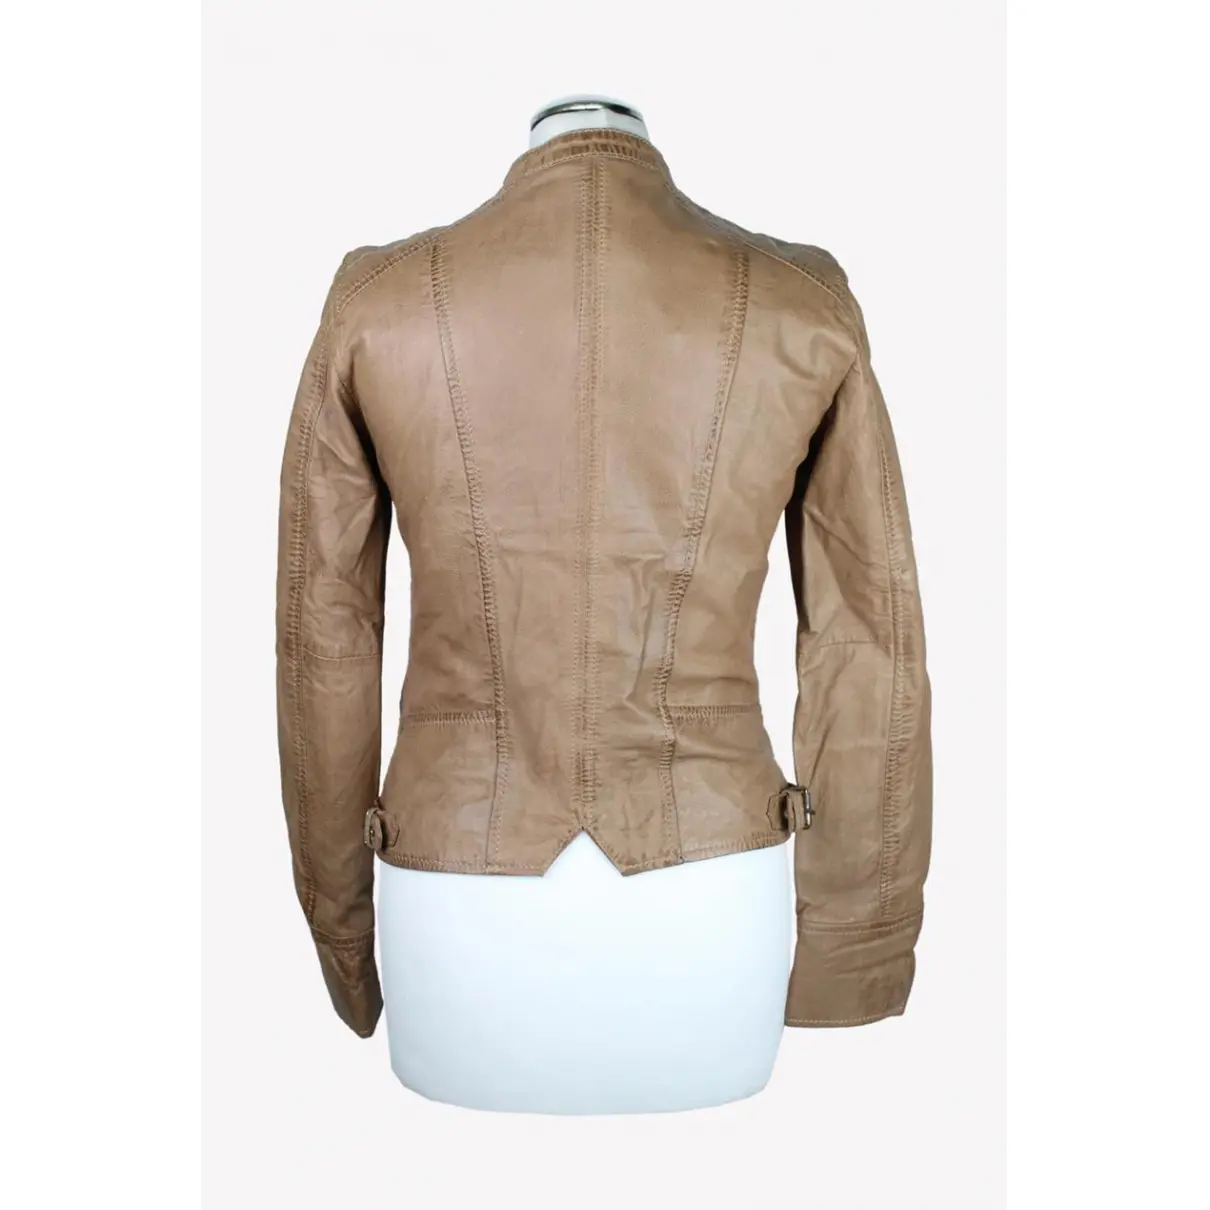 Buy Oakwood Leather short vest online